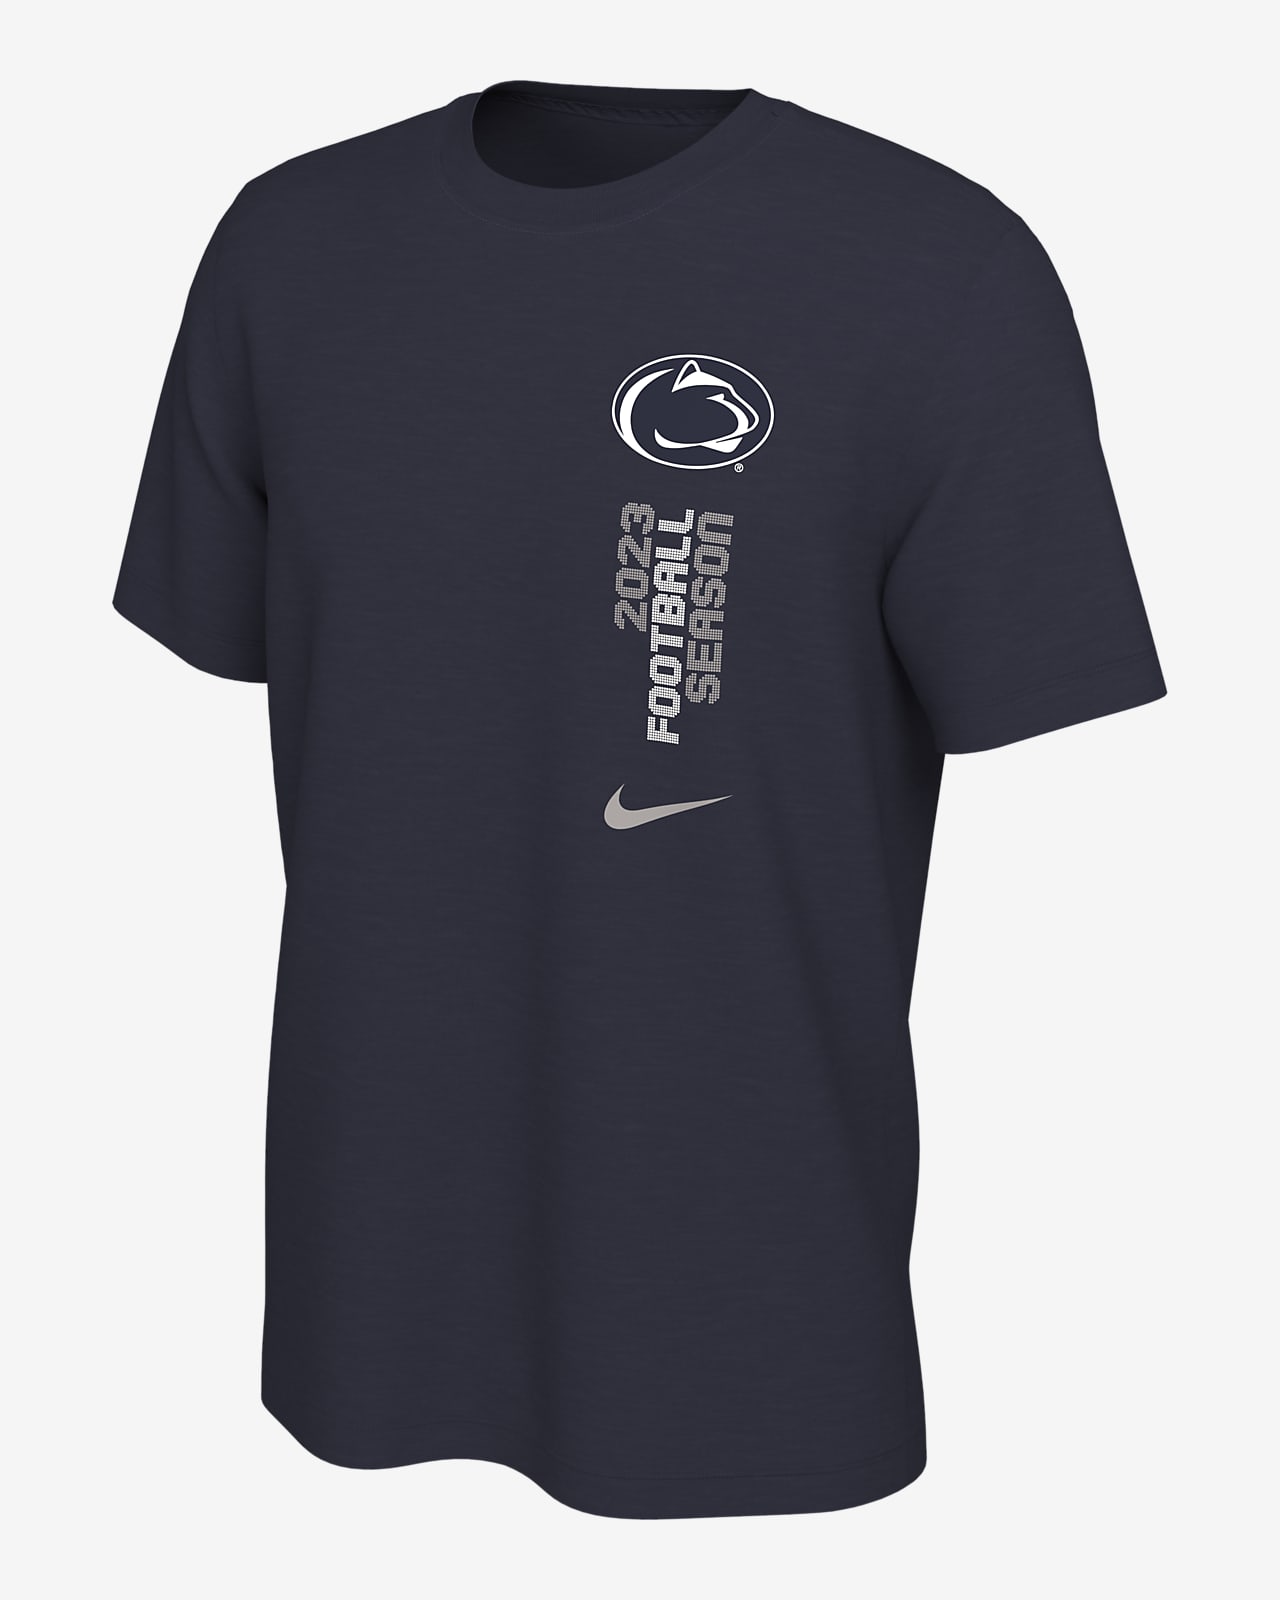 Penn State Schedule Men's Nike College T-Shirt